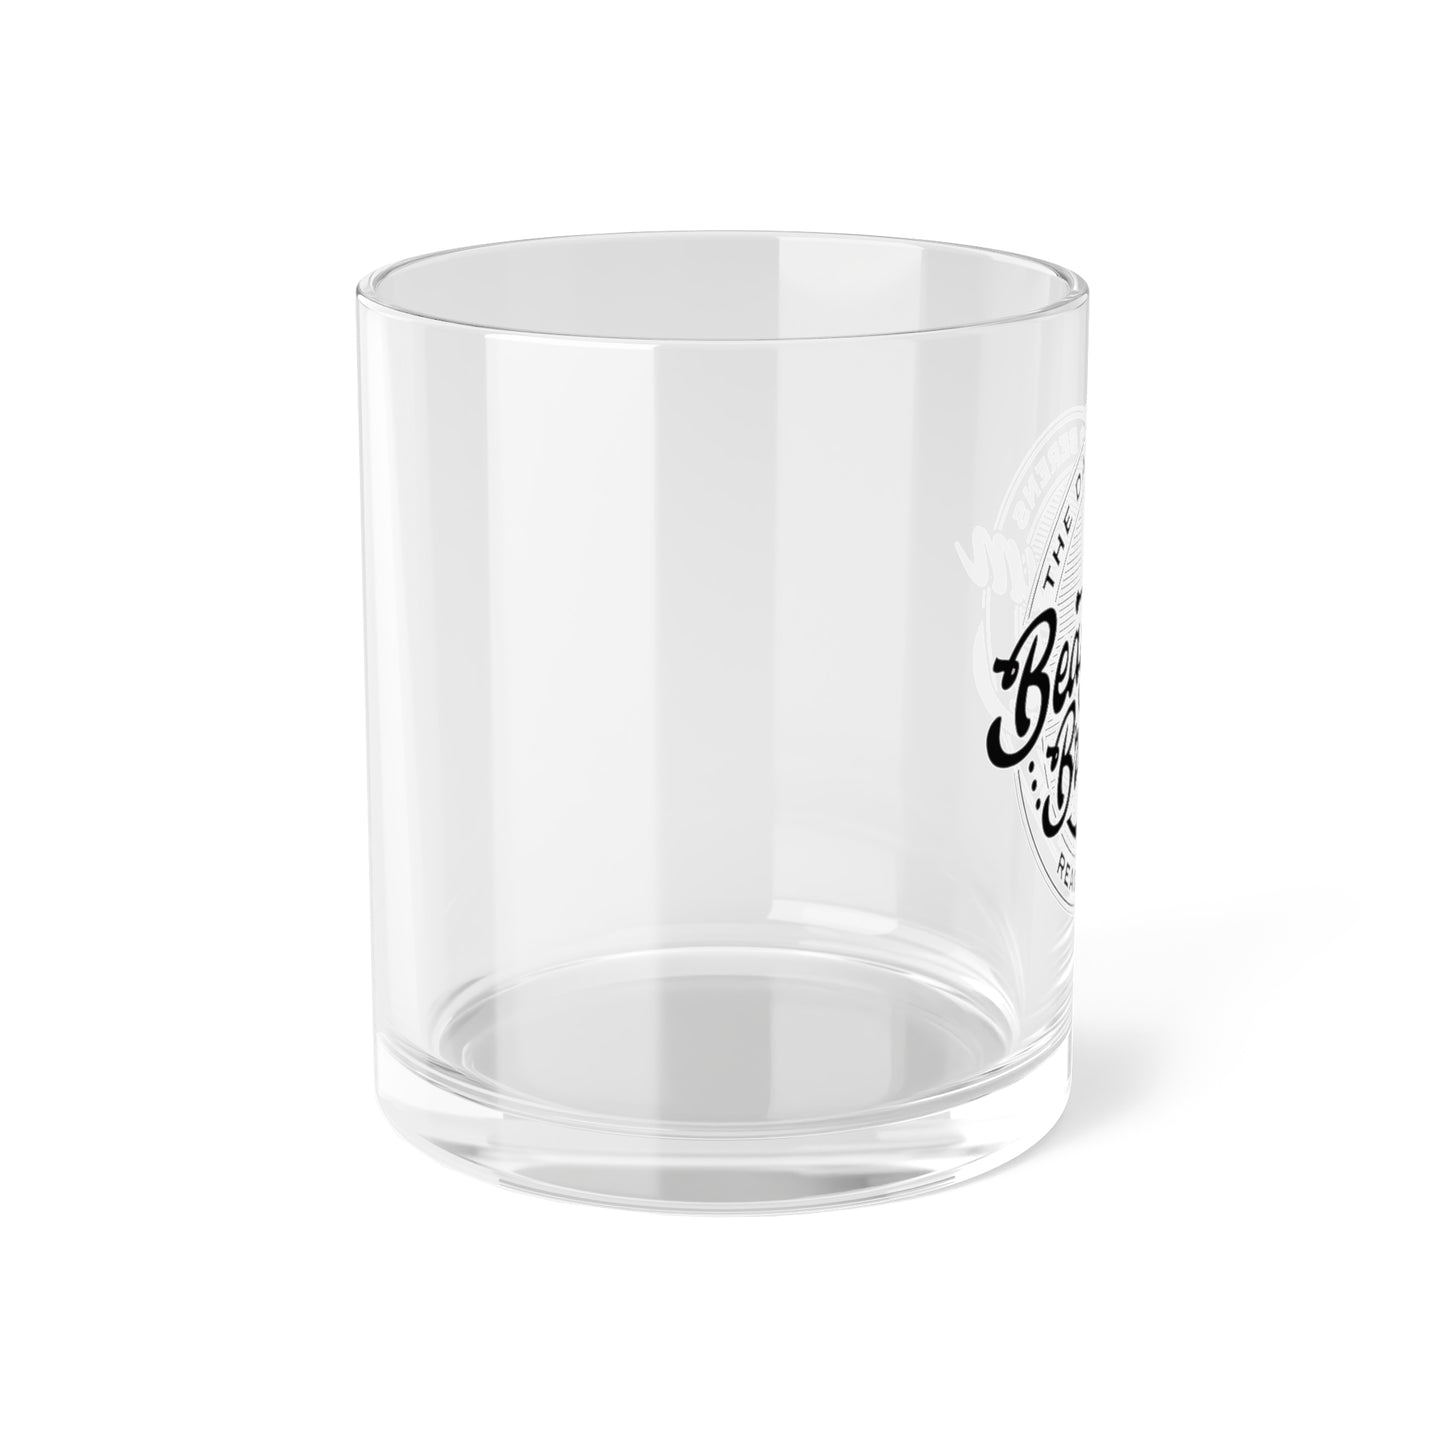 Beach Bum Brigade Bar Glass